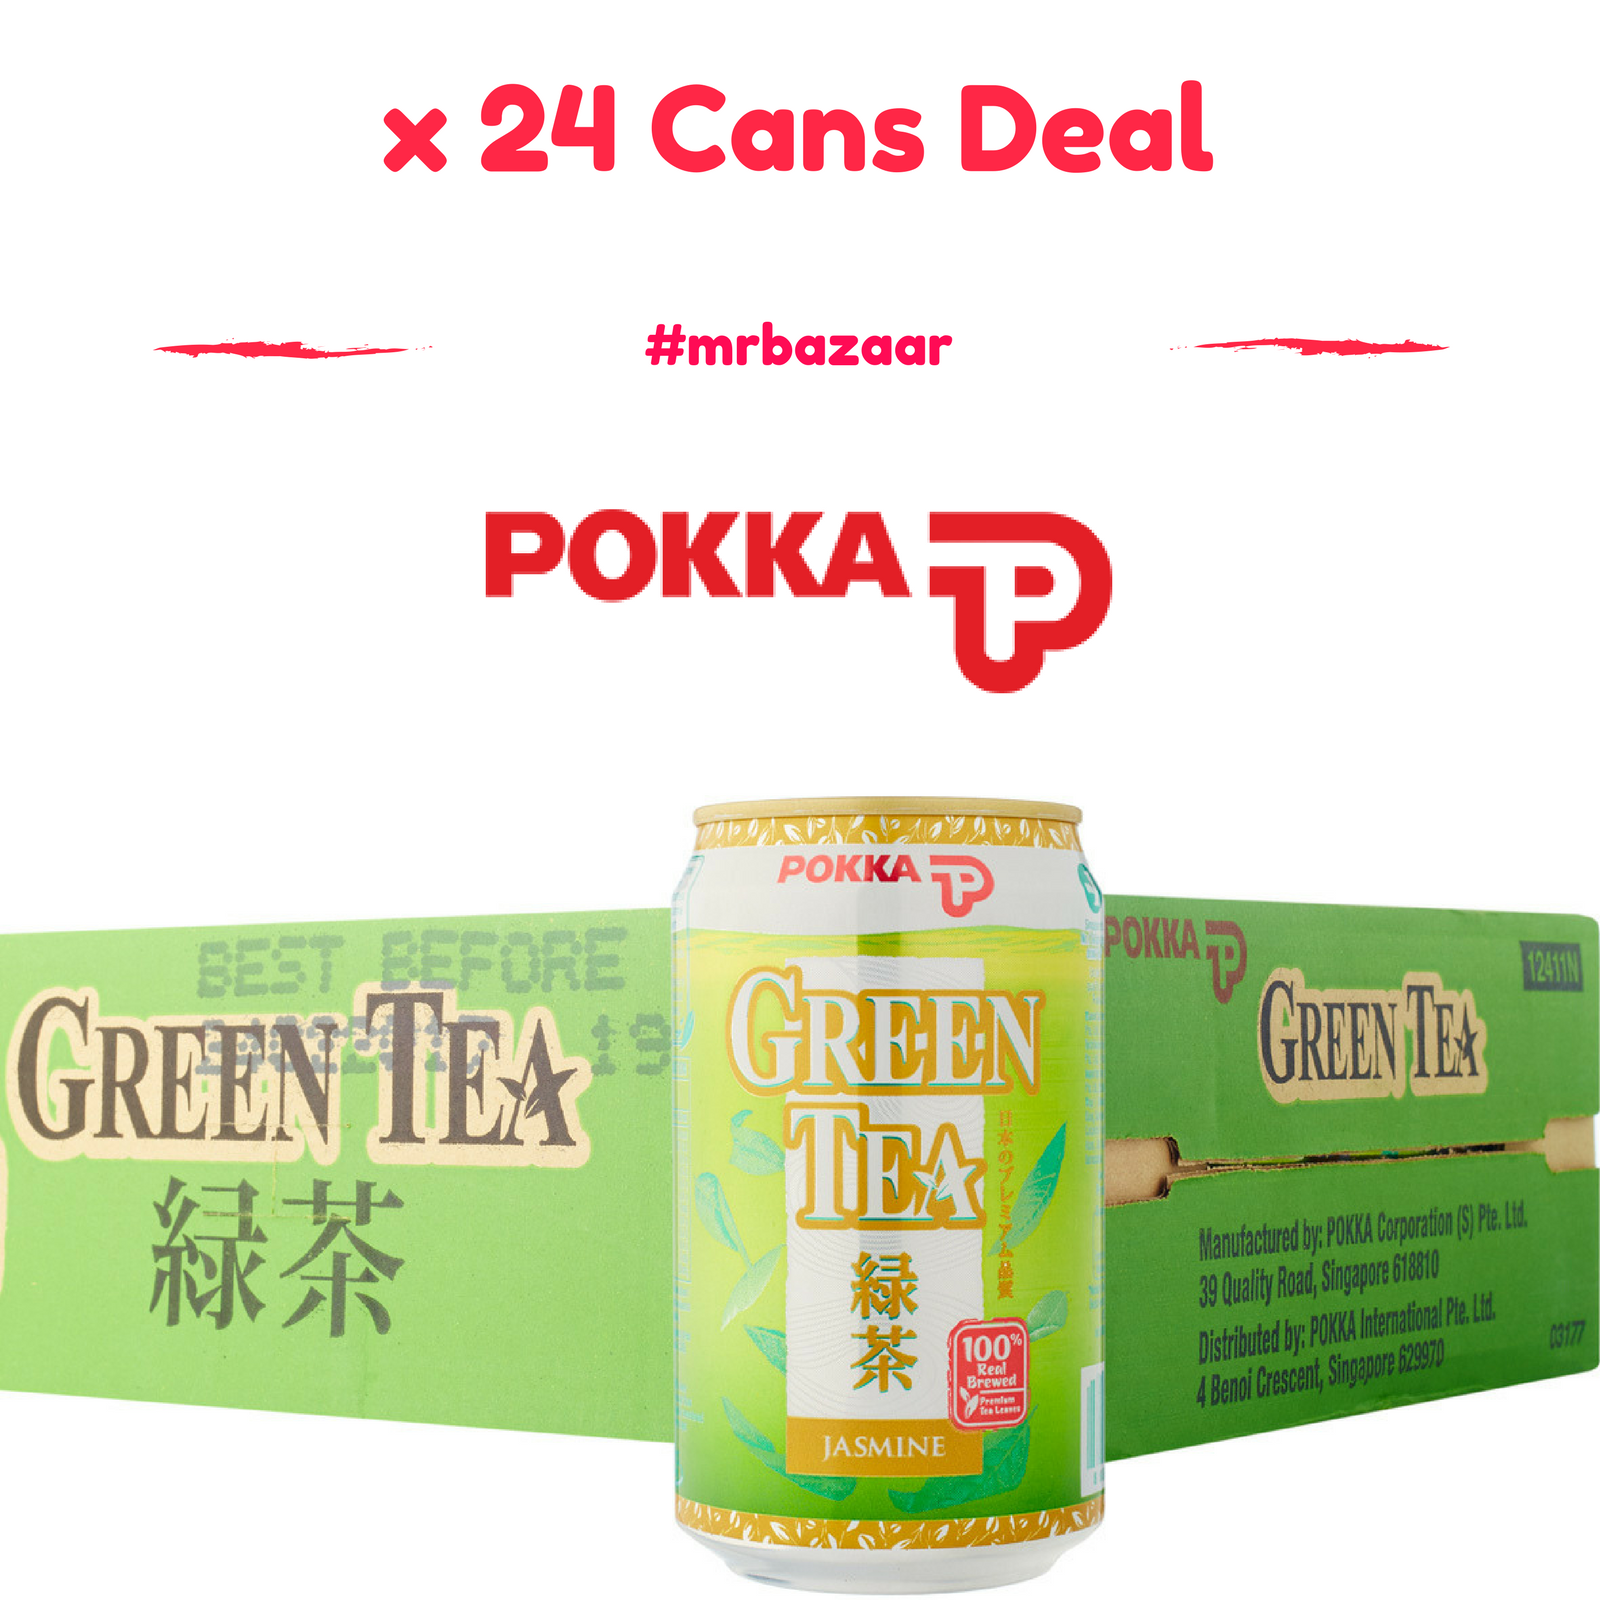 Pokka Jasmine Green Tea x 24 Cans Carton Deal (300ml)